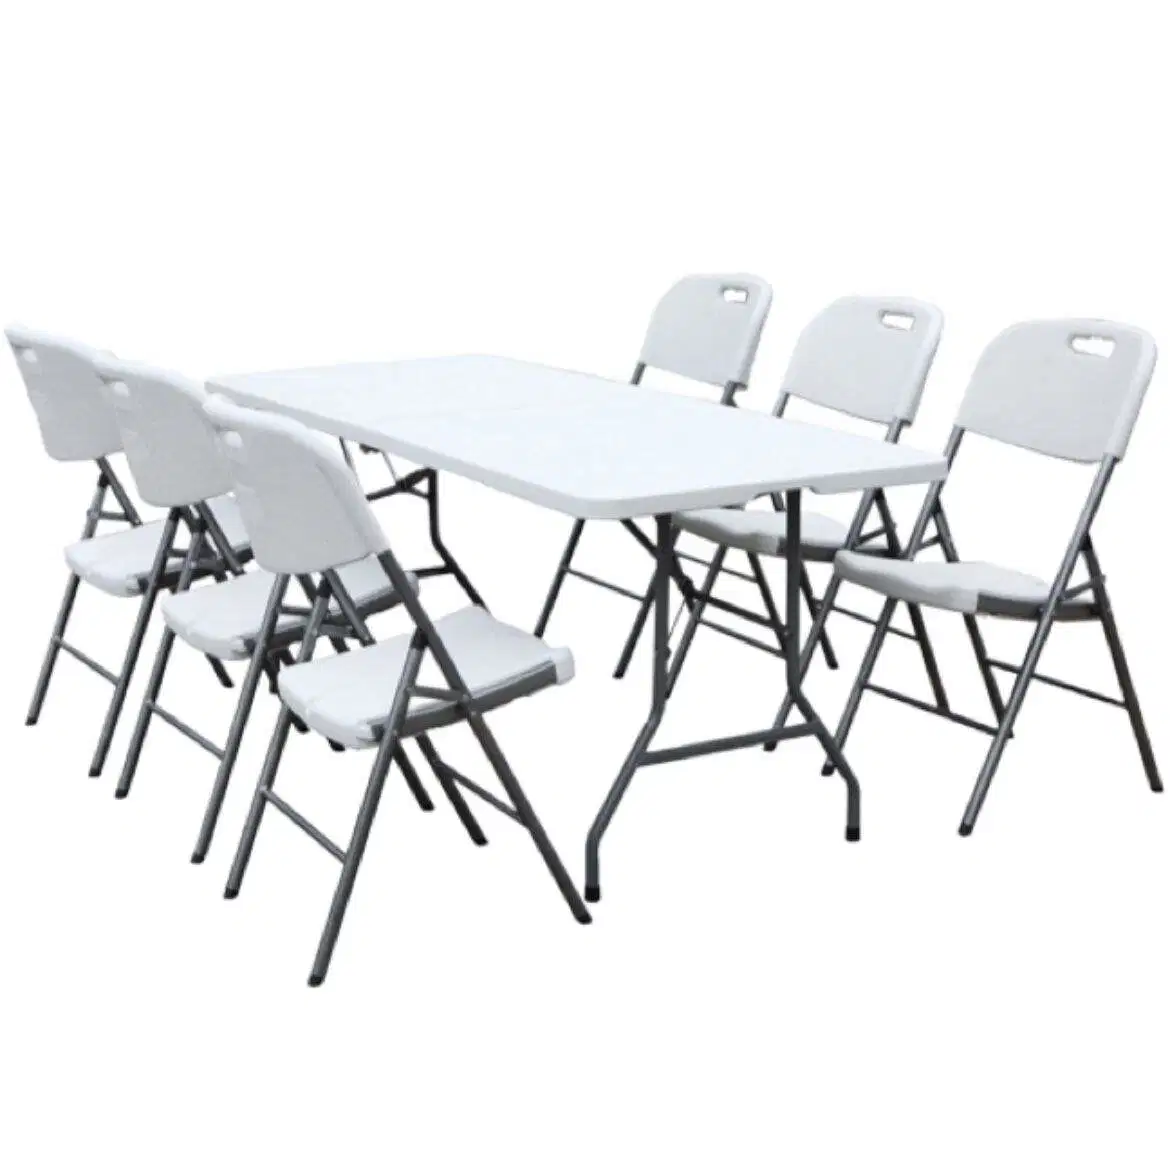 6 FT Portable Rectangular Outdoor Garden Plastic 	Outdoor Garden Tables and Chairs